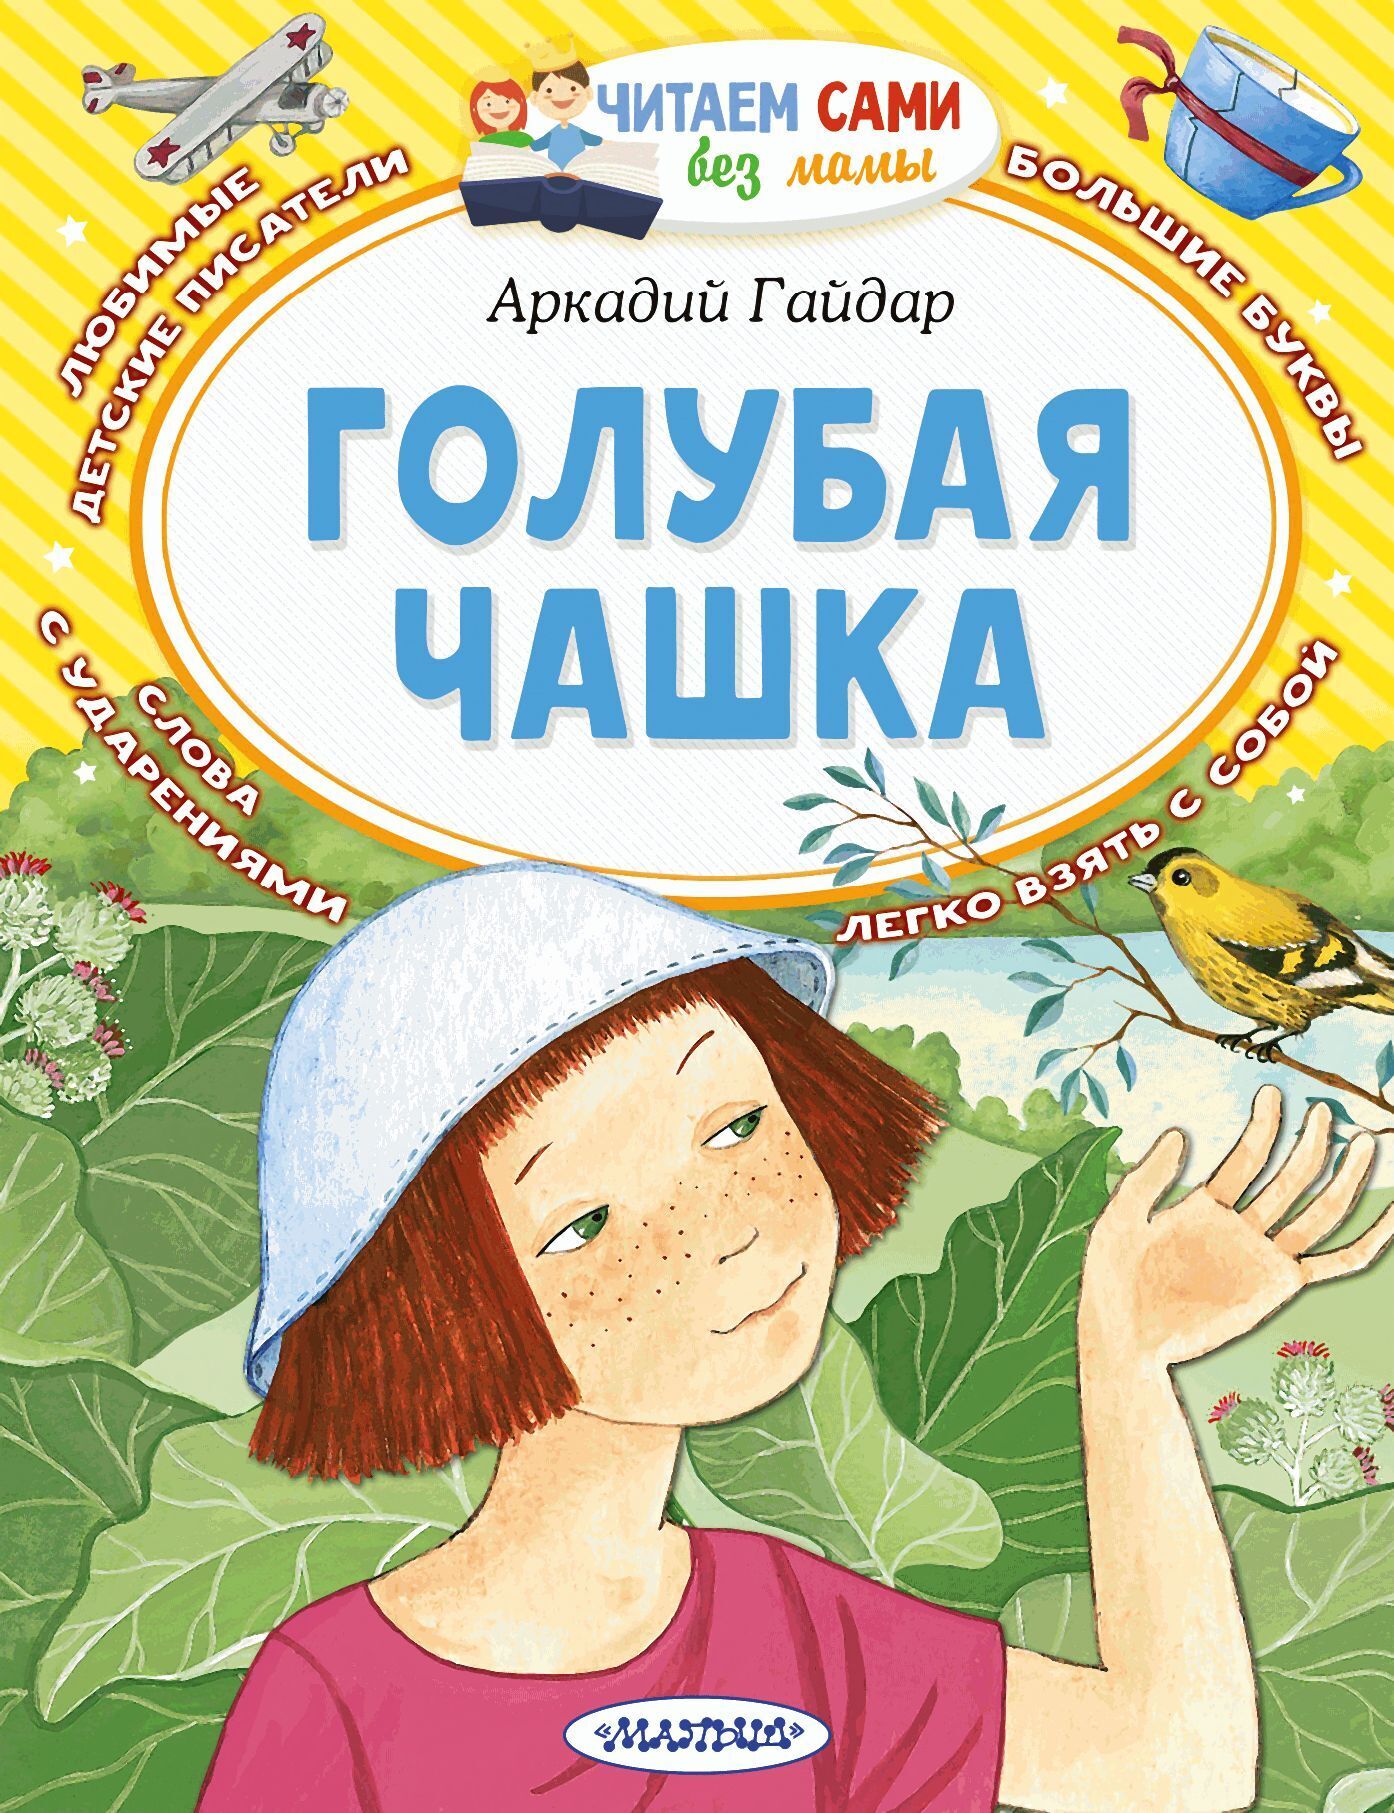 Голубая чашка, Аркадий Гайдар – скачать книгу fb2, epub, pdf на ЛитРес